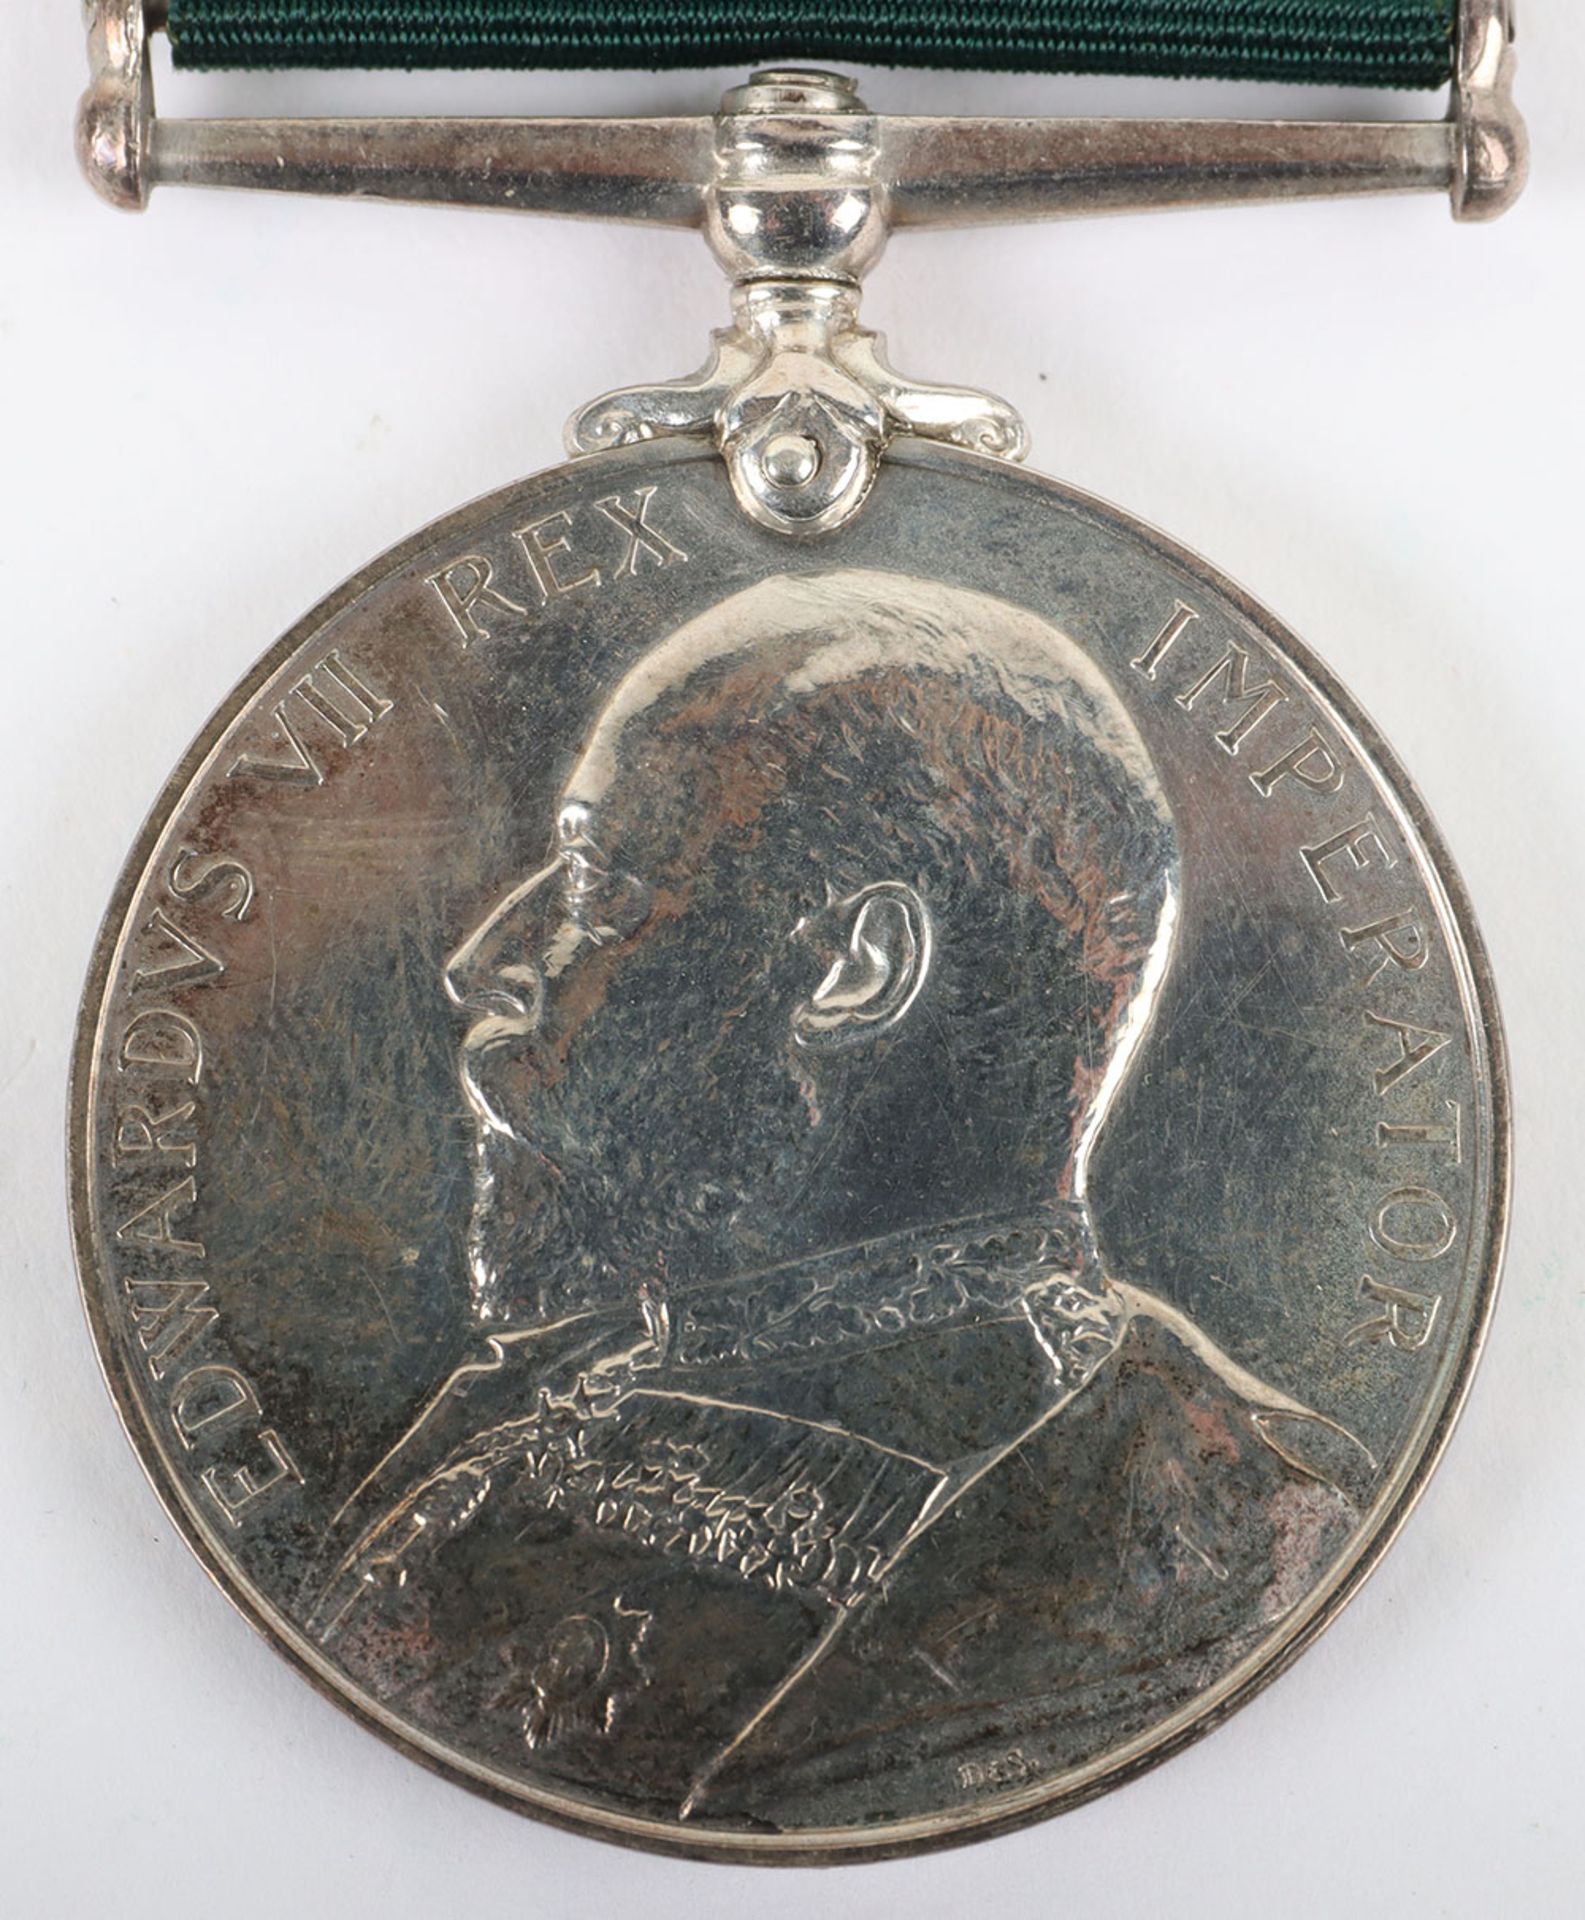 Edwardian Volunteer Long Service Medal to an Orderly Room Clerk in the Durham Royal Engineer Volunte - Image 2 of 5